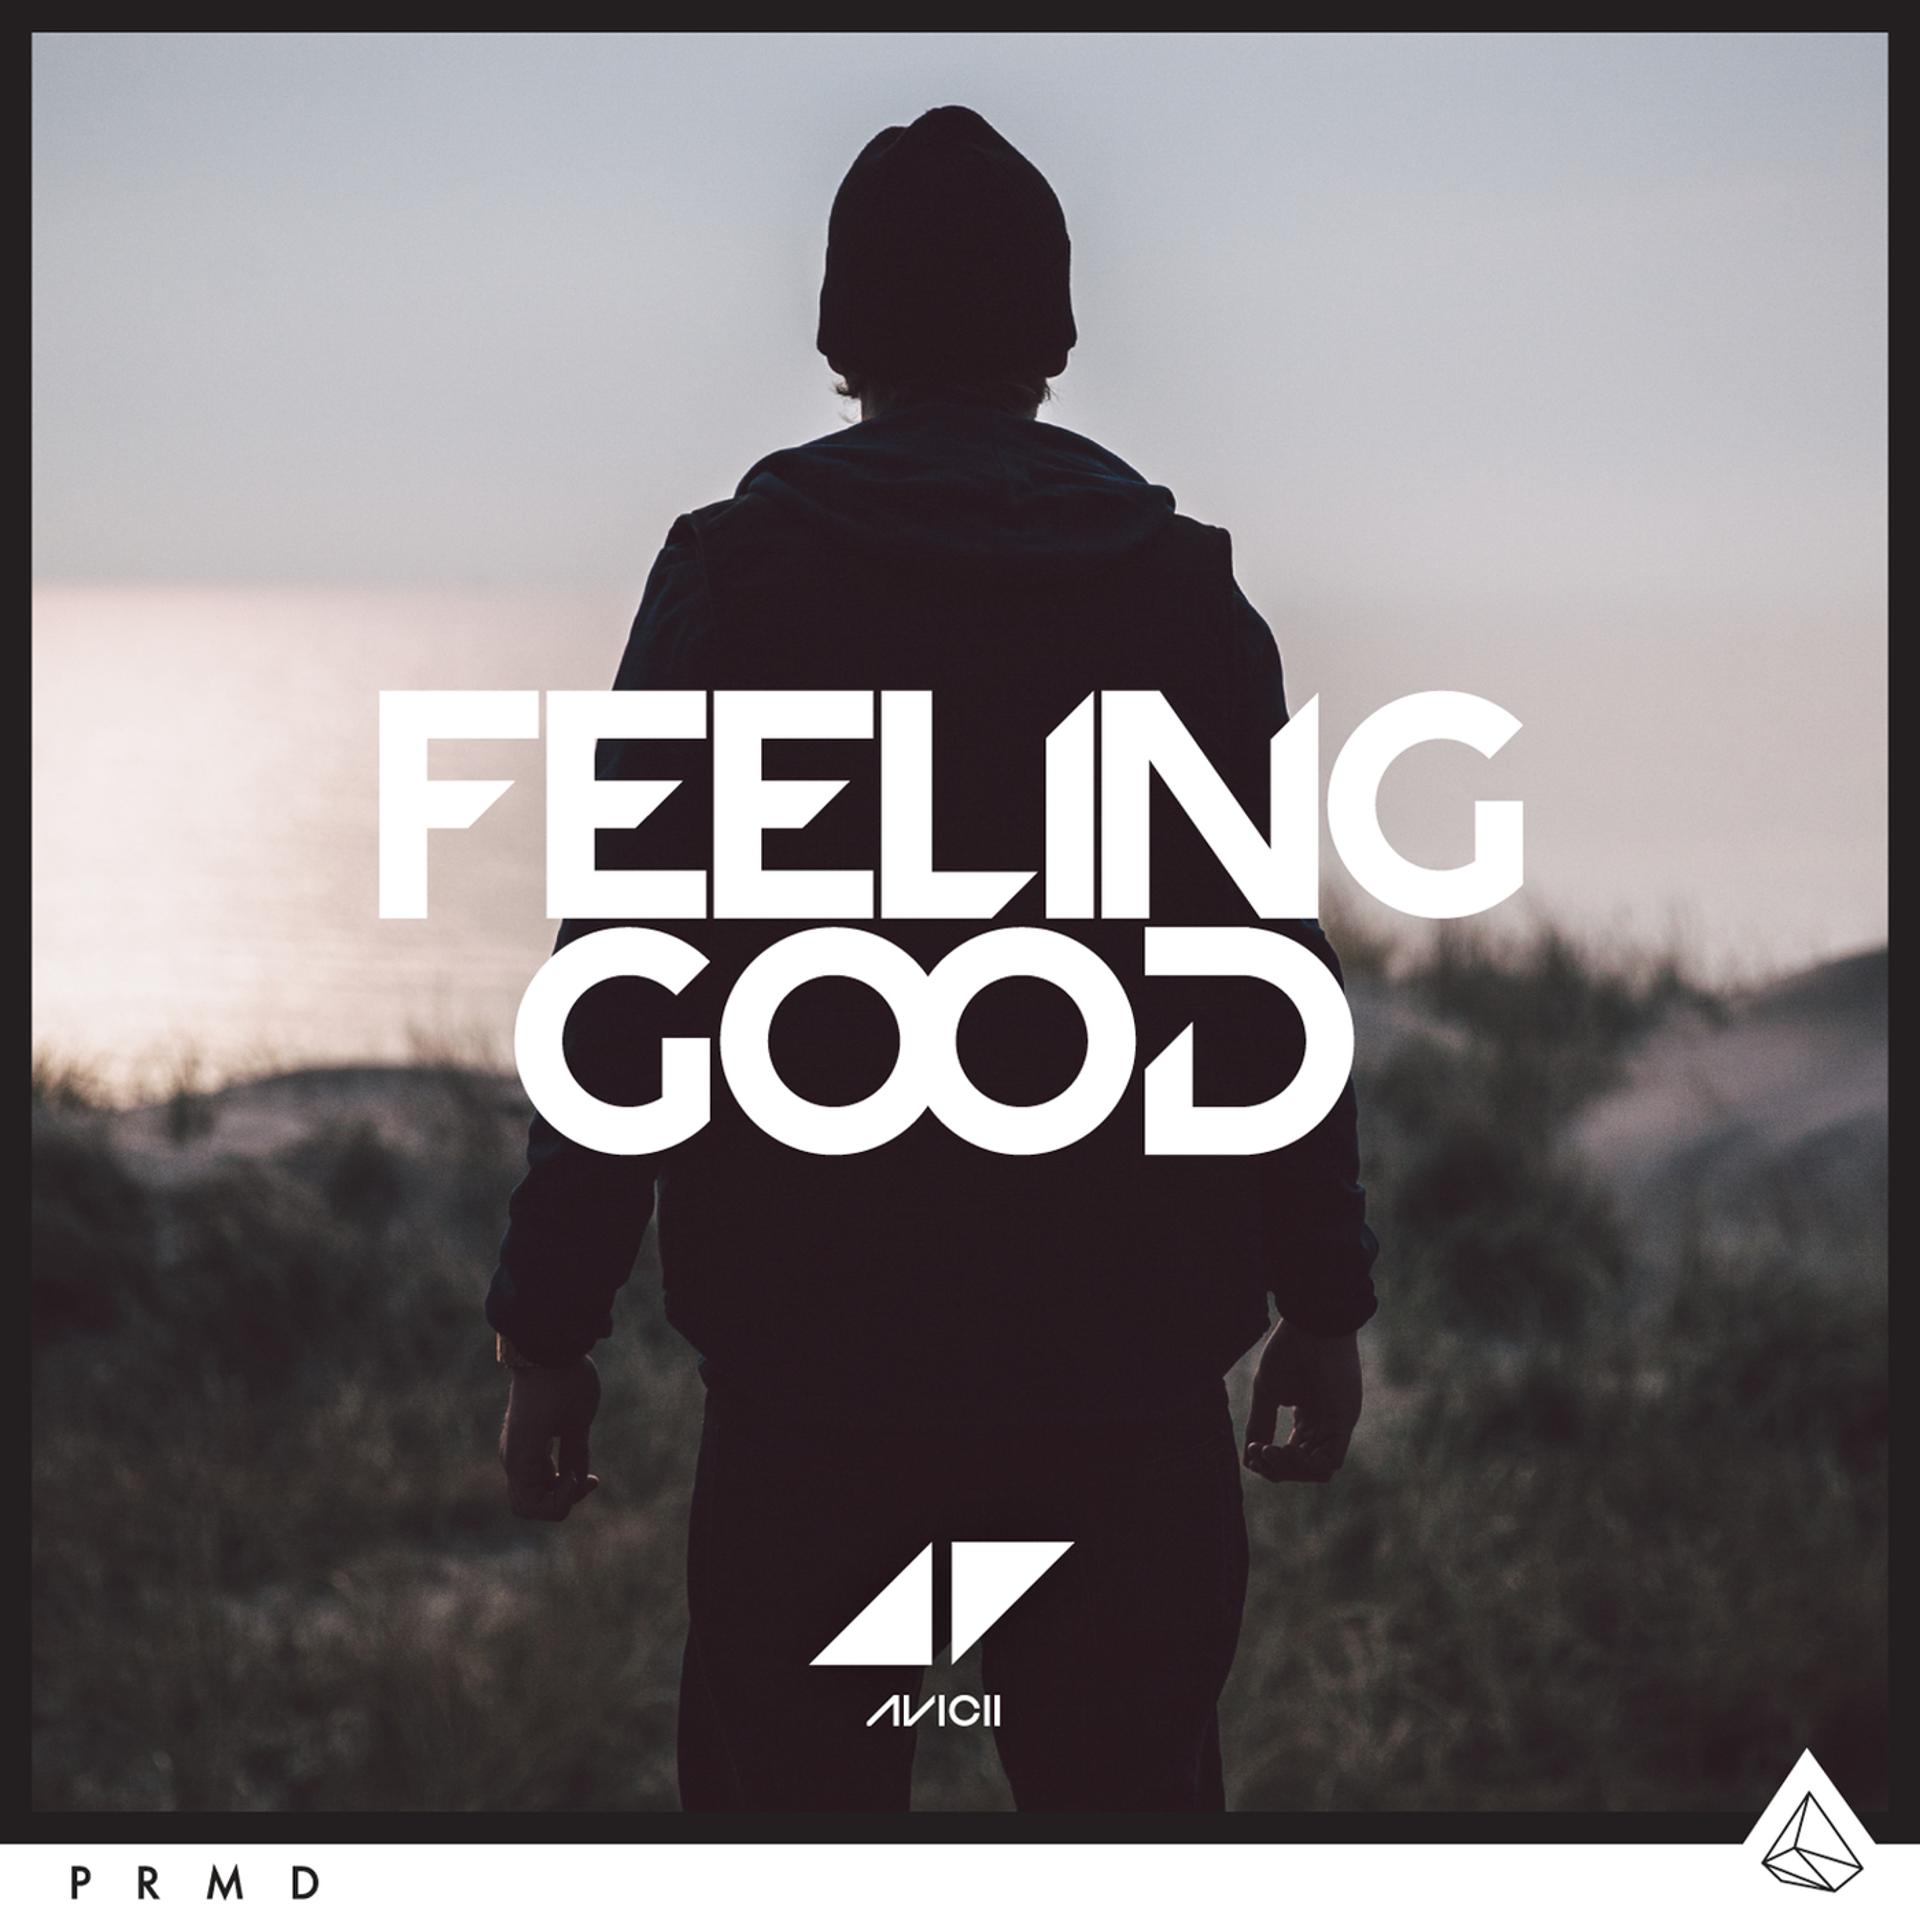 Feel good mixed. Avicii_feeling good «Single» [2015]. Good feeling. Feeling good обложка. Avicii feeling good обложка.